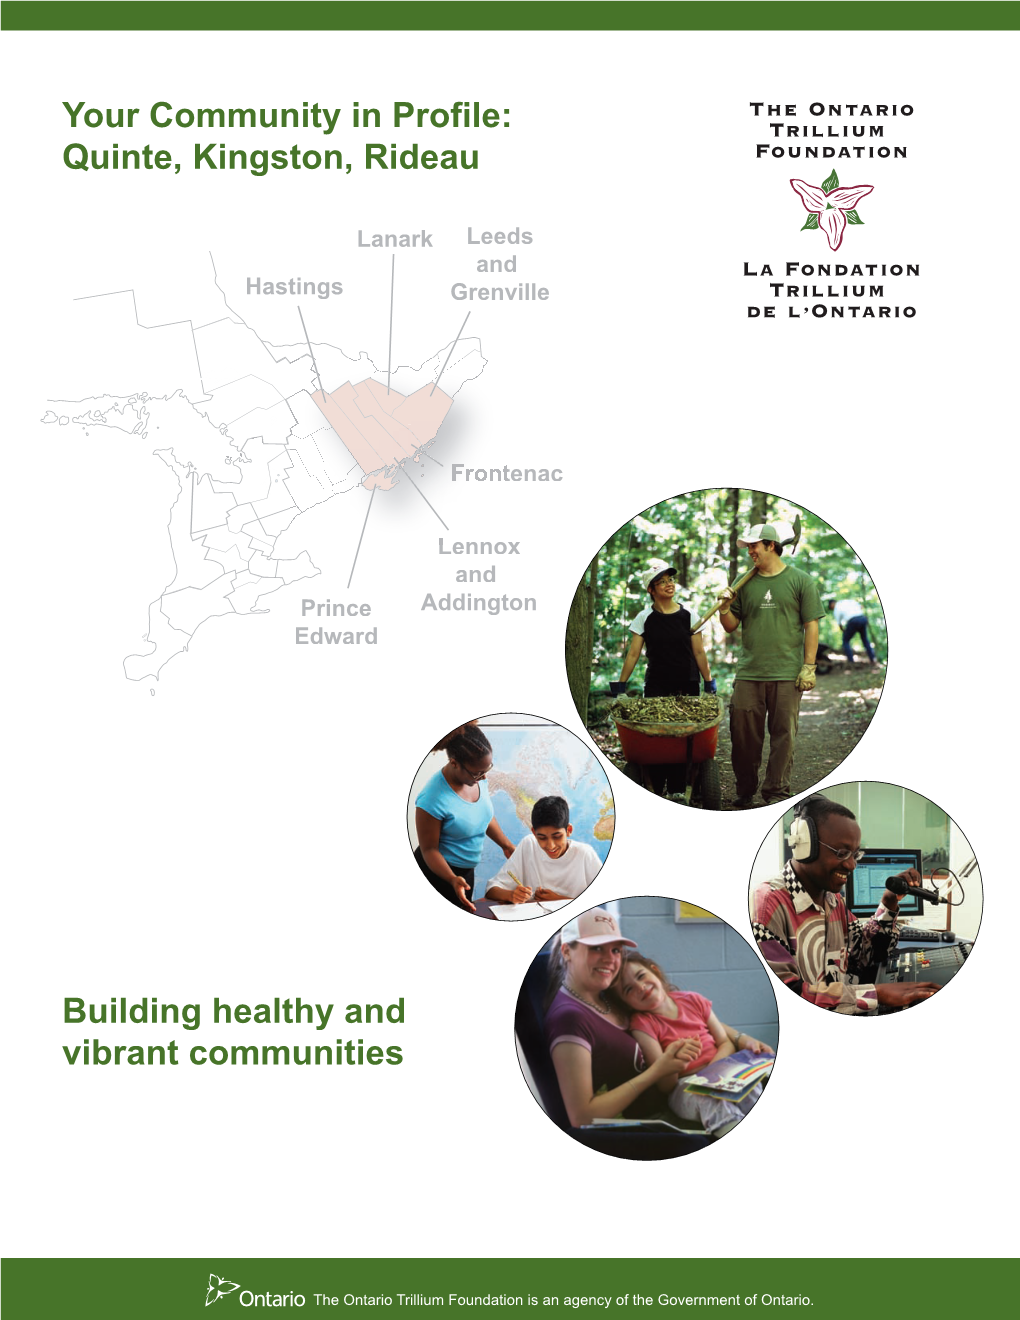 Quinte, Kingston, Rideau Building Healthy and Vibrant Communities